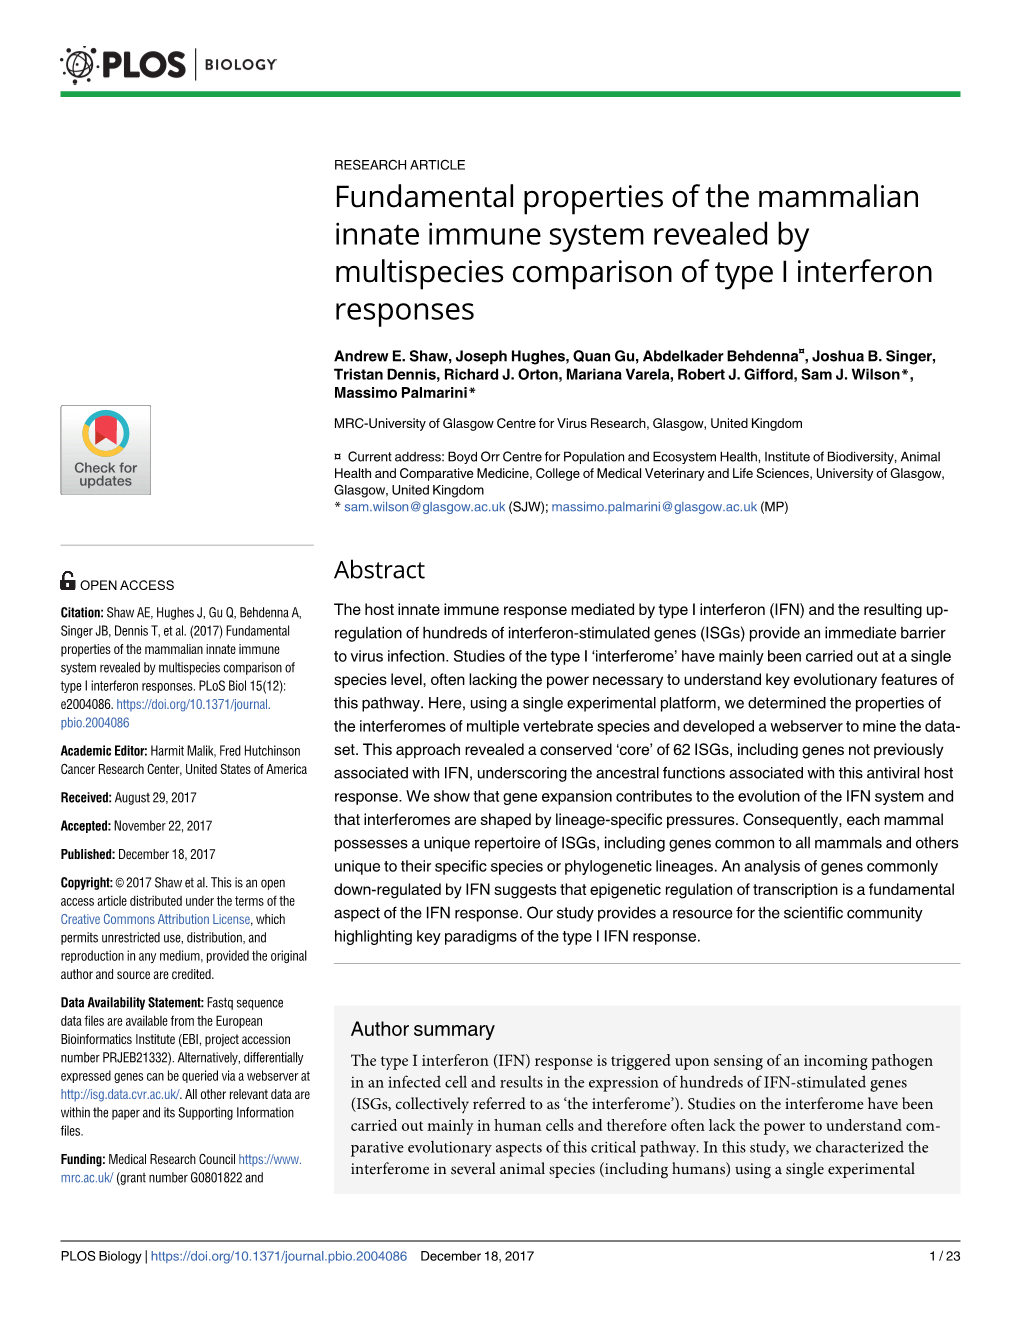 Fundamental Properties of the Mammalian Innate Immune System Revealed by Multispecies Comparison of Type I Interferon Responses